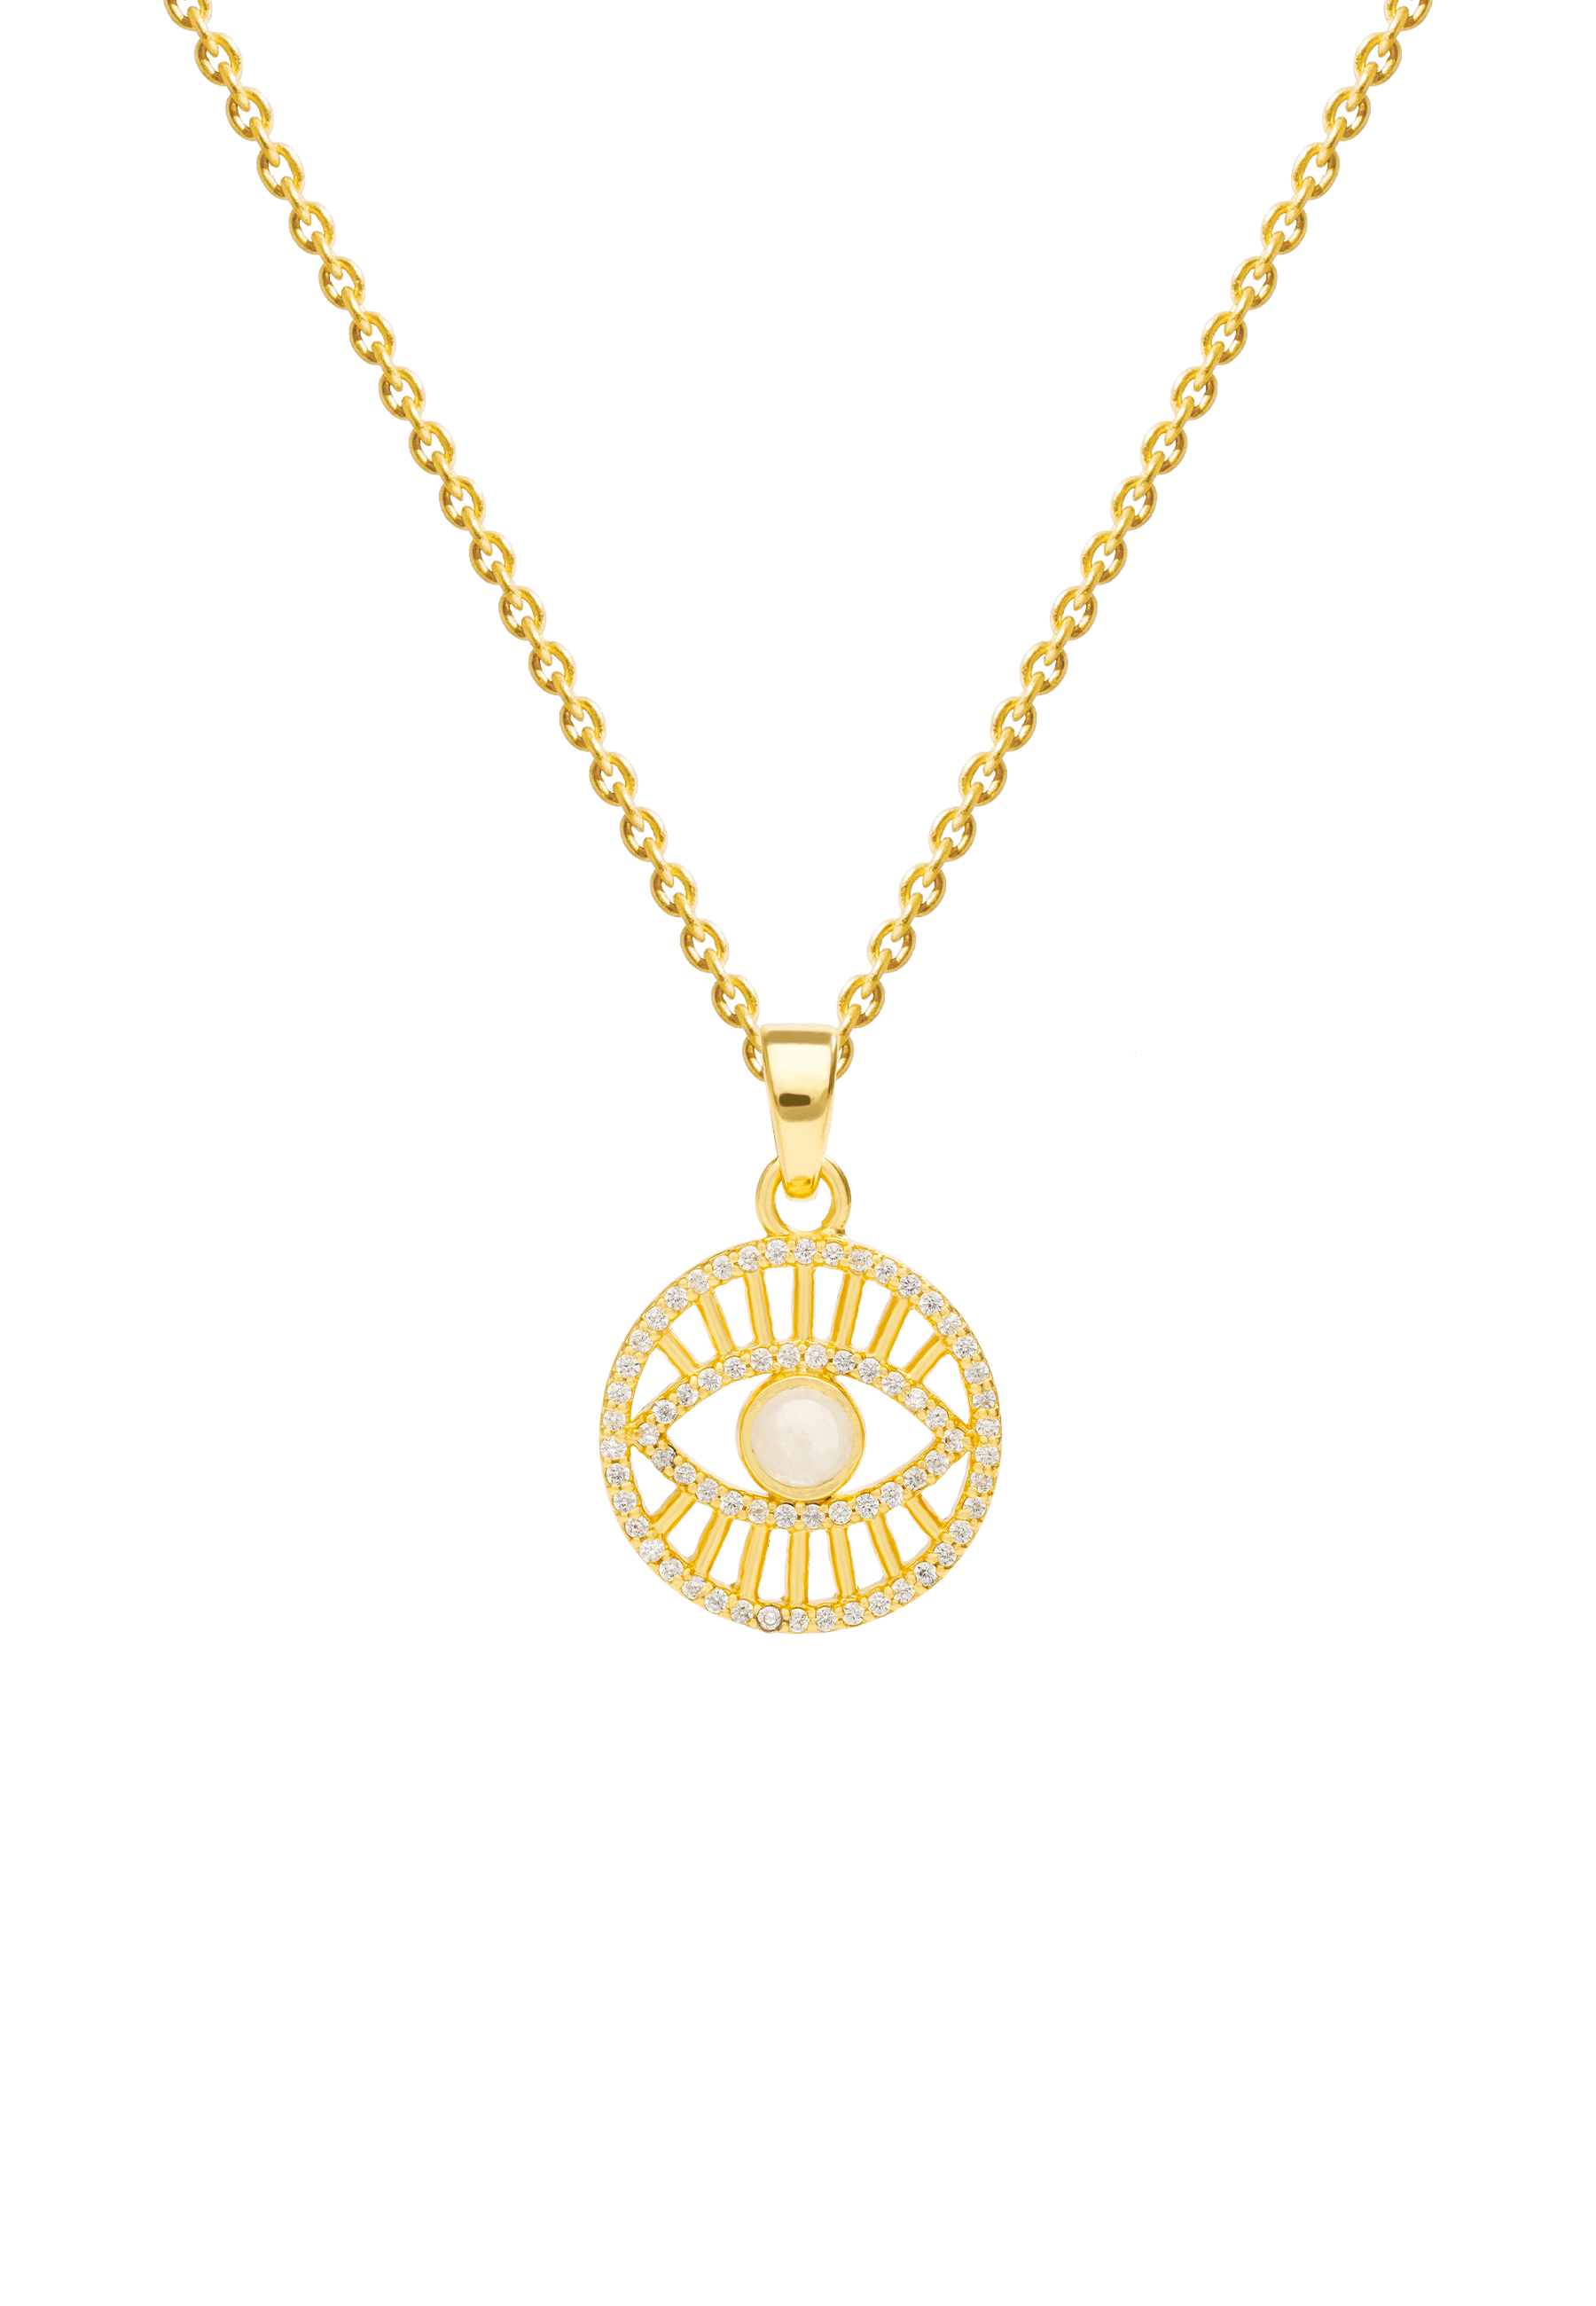 Throat Chakra Necklace, Third Eye Jewelry Reiki Energy Pendant 